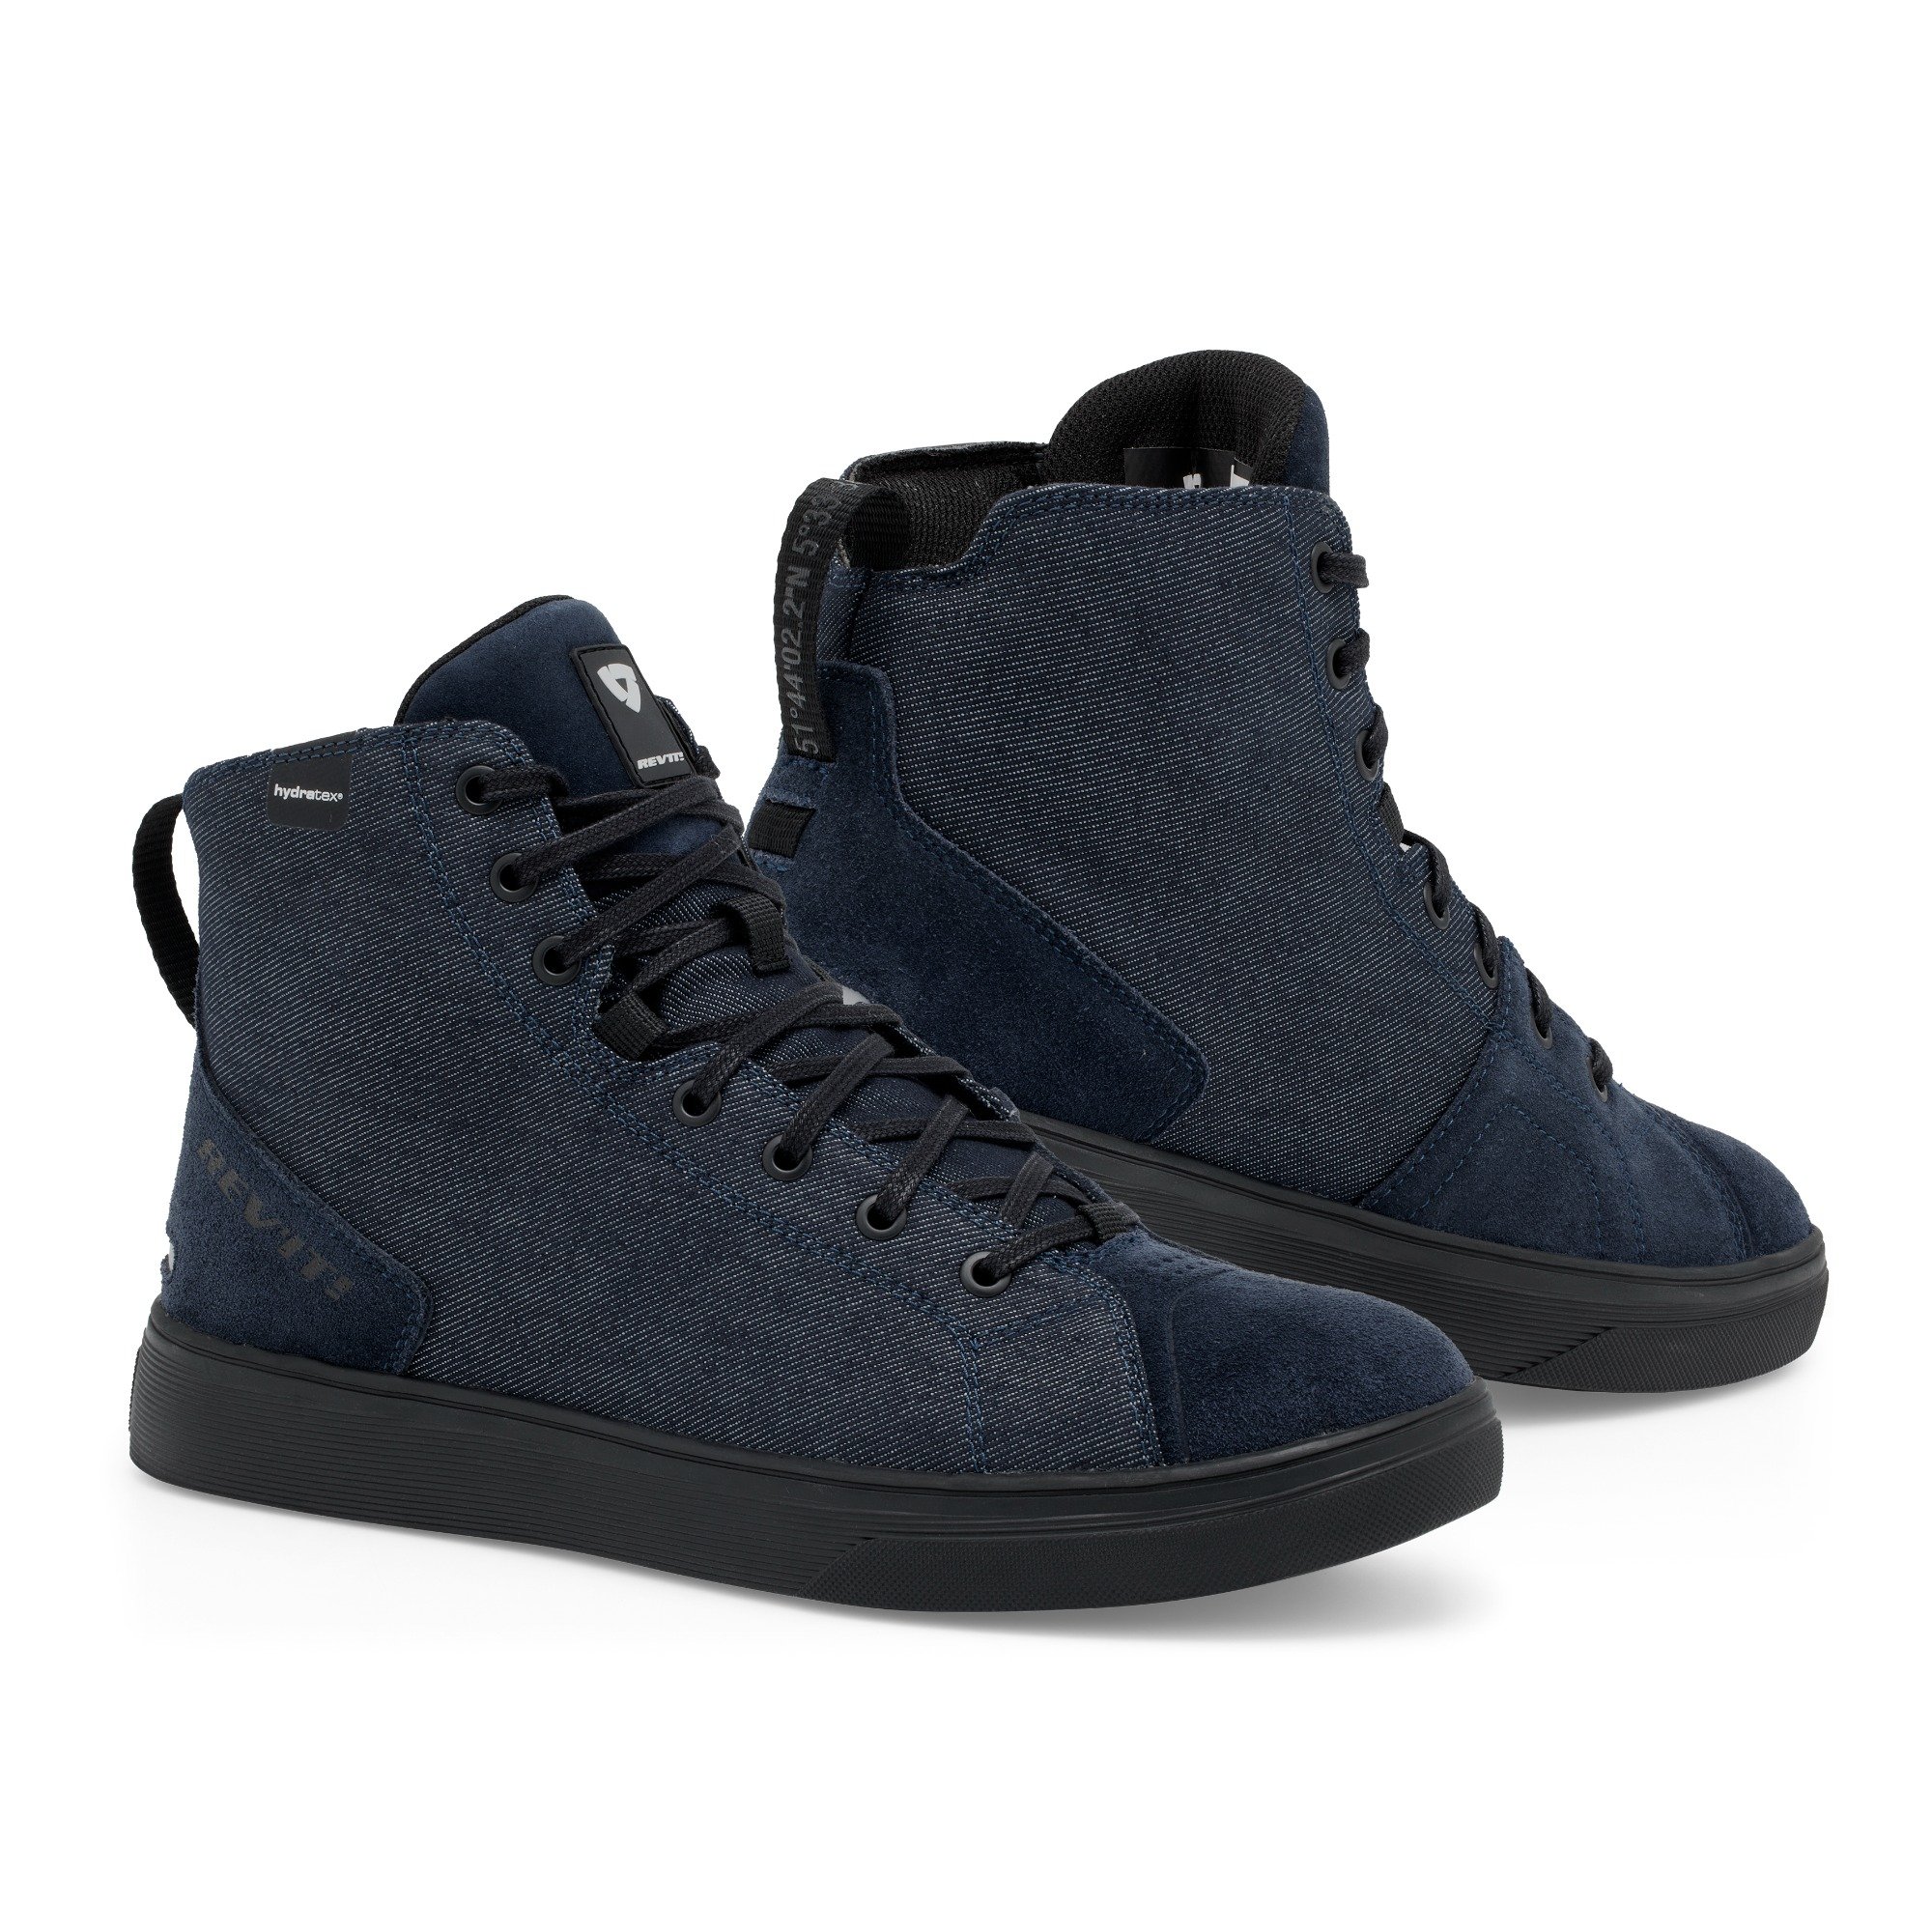 Image of REV'IT! Delta H2O Shoes Dark Blue Black Size 41 ID 8700001356442